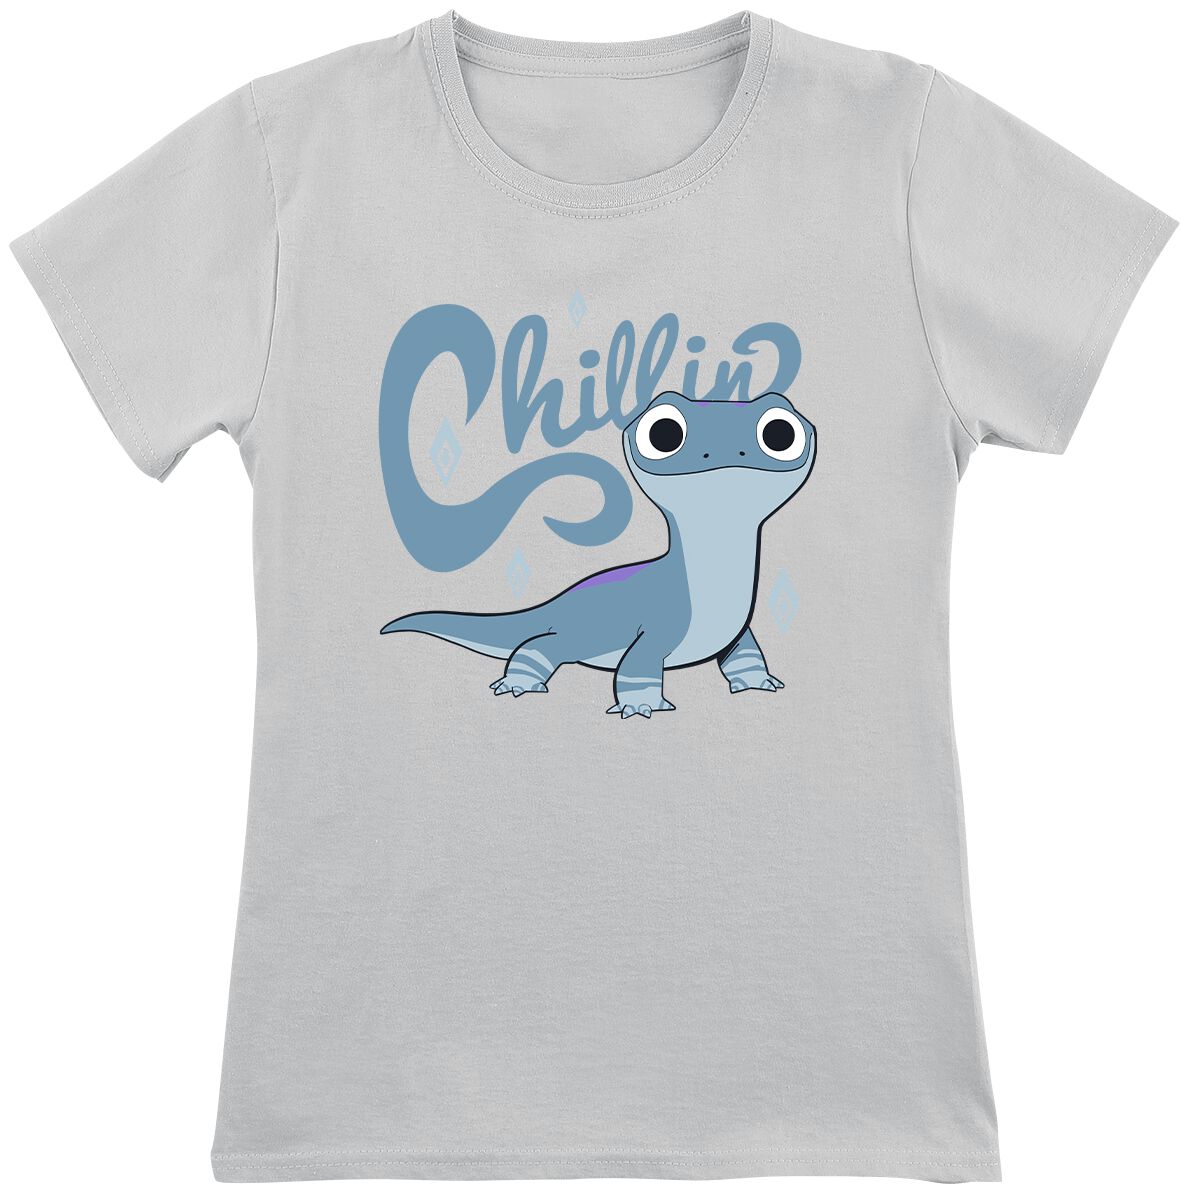 Frozen Kids - Salamander Bruni chillin' T-Shirt grey